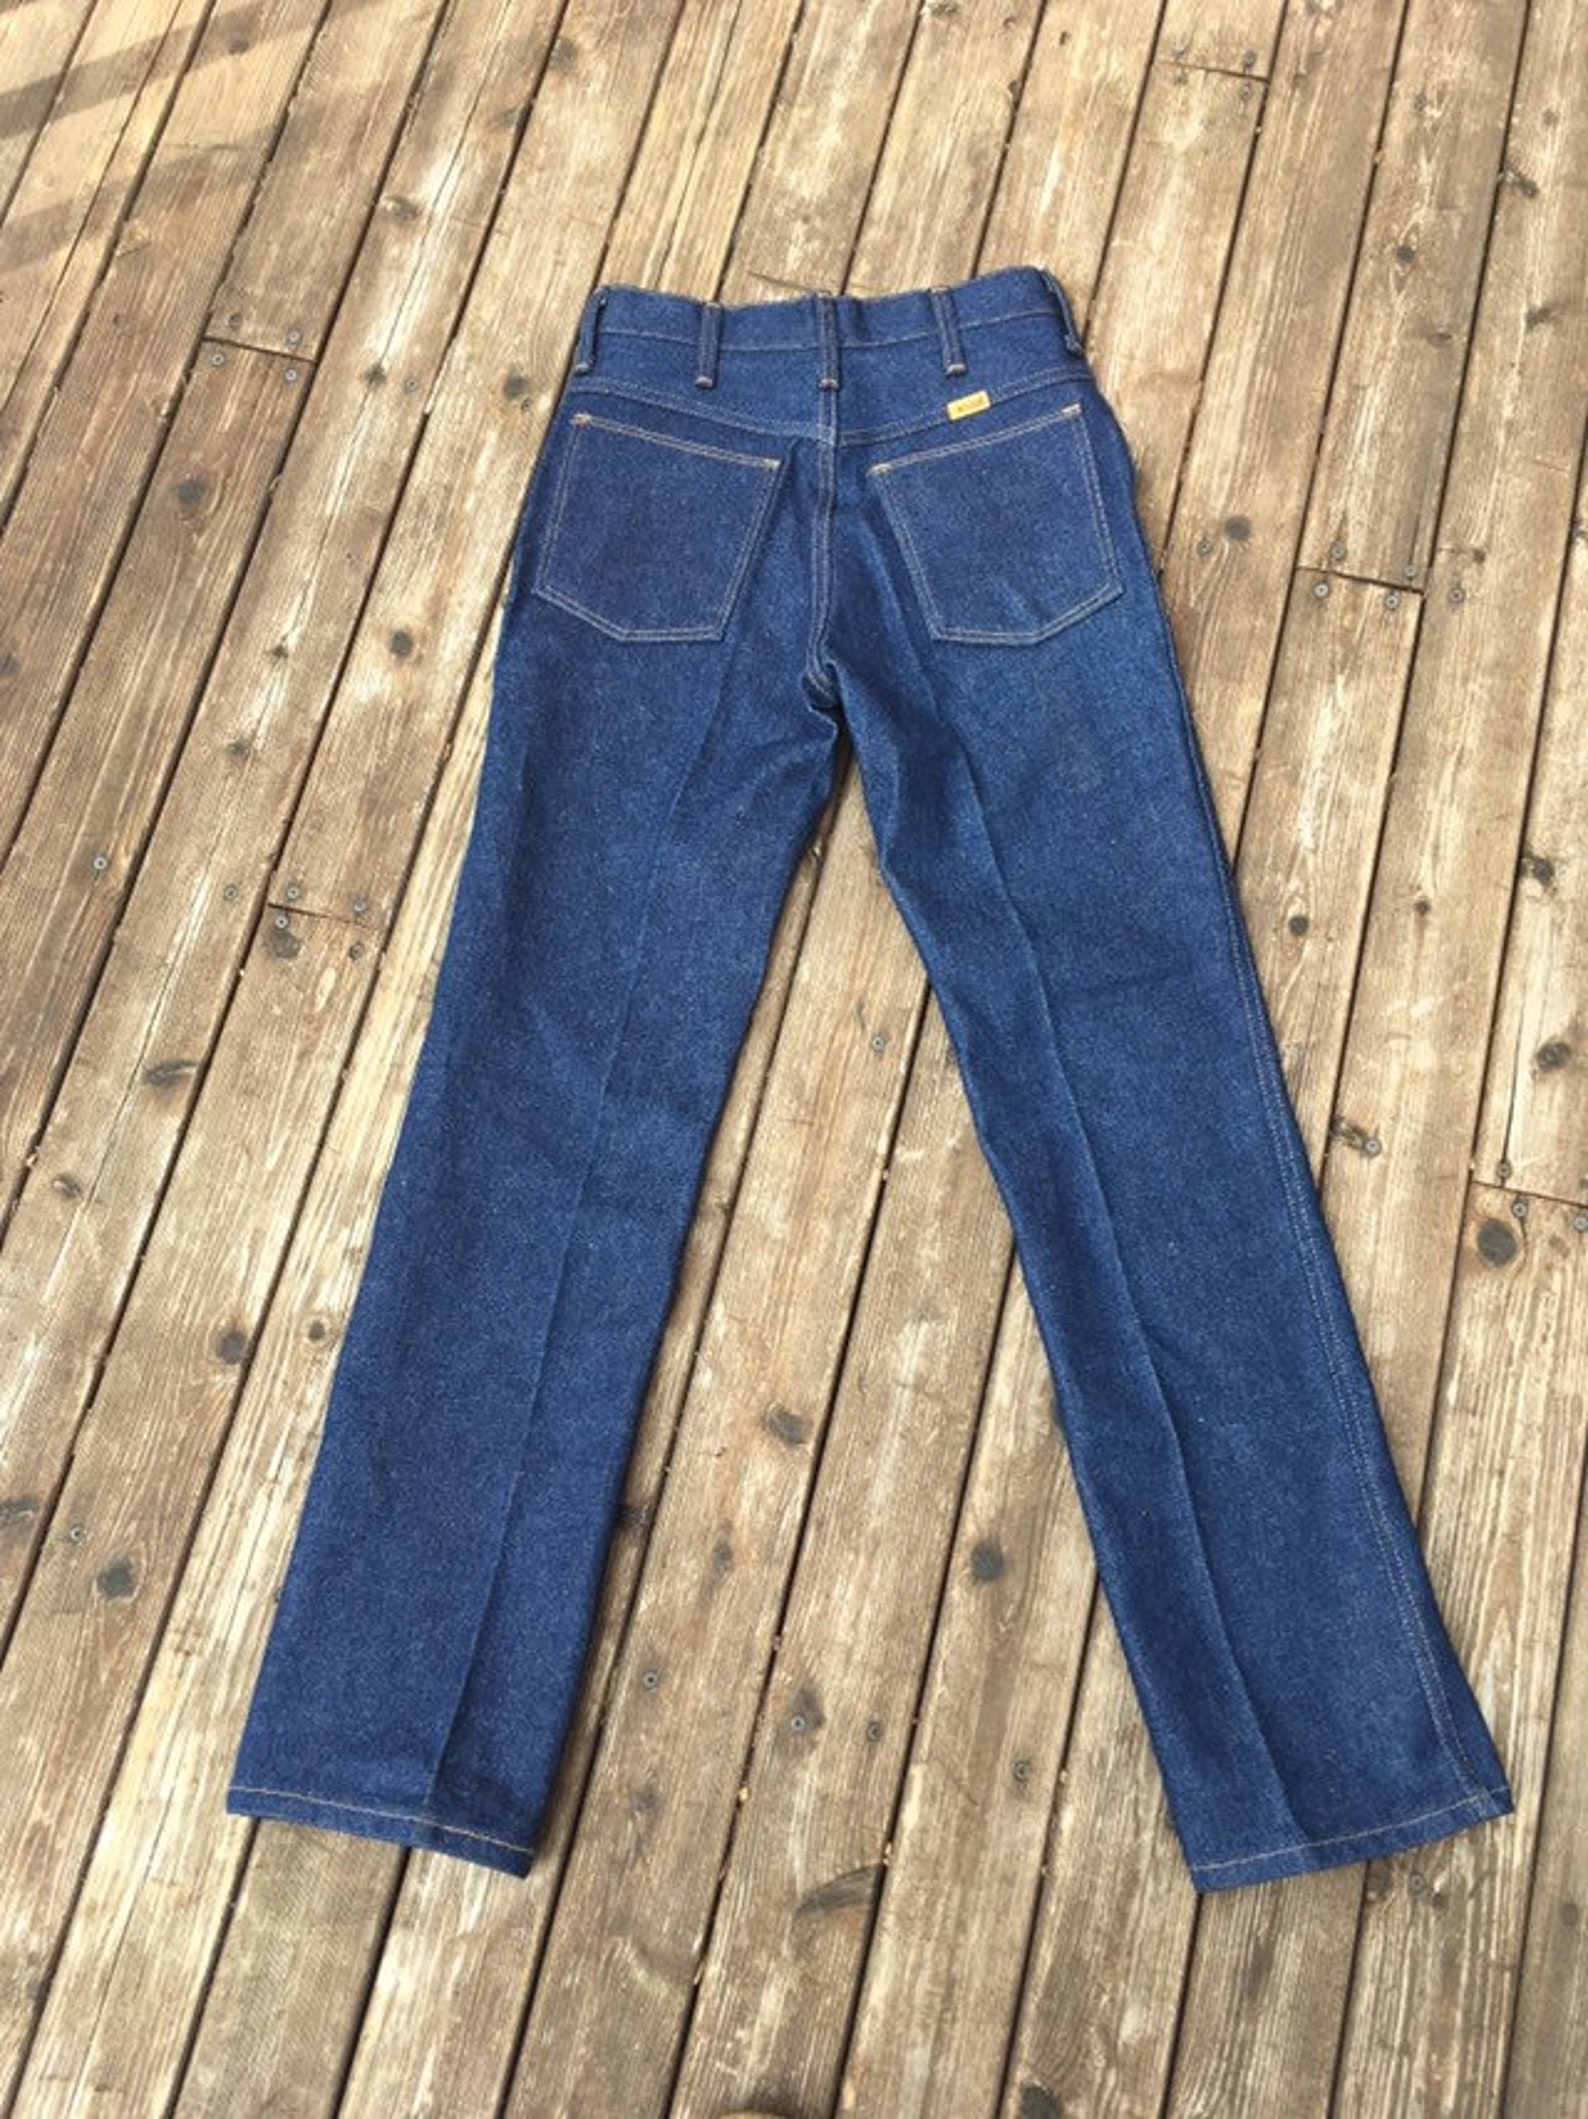 28/29 1970s Rustler jeans Talon zipper made in USA 27 28 29 | Etsy